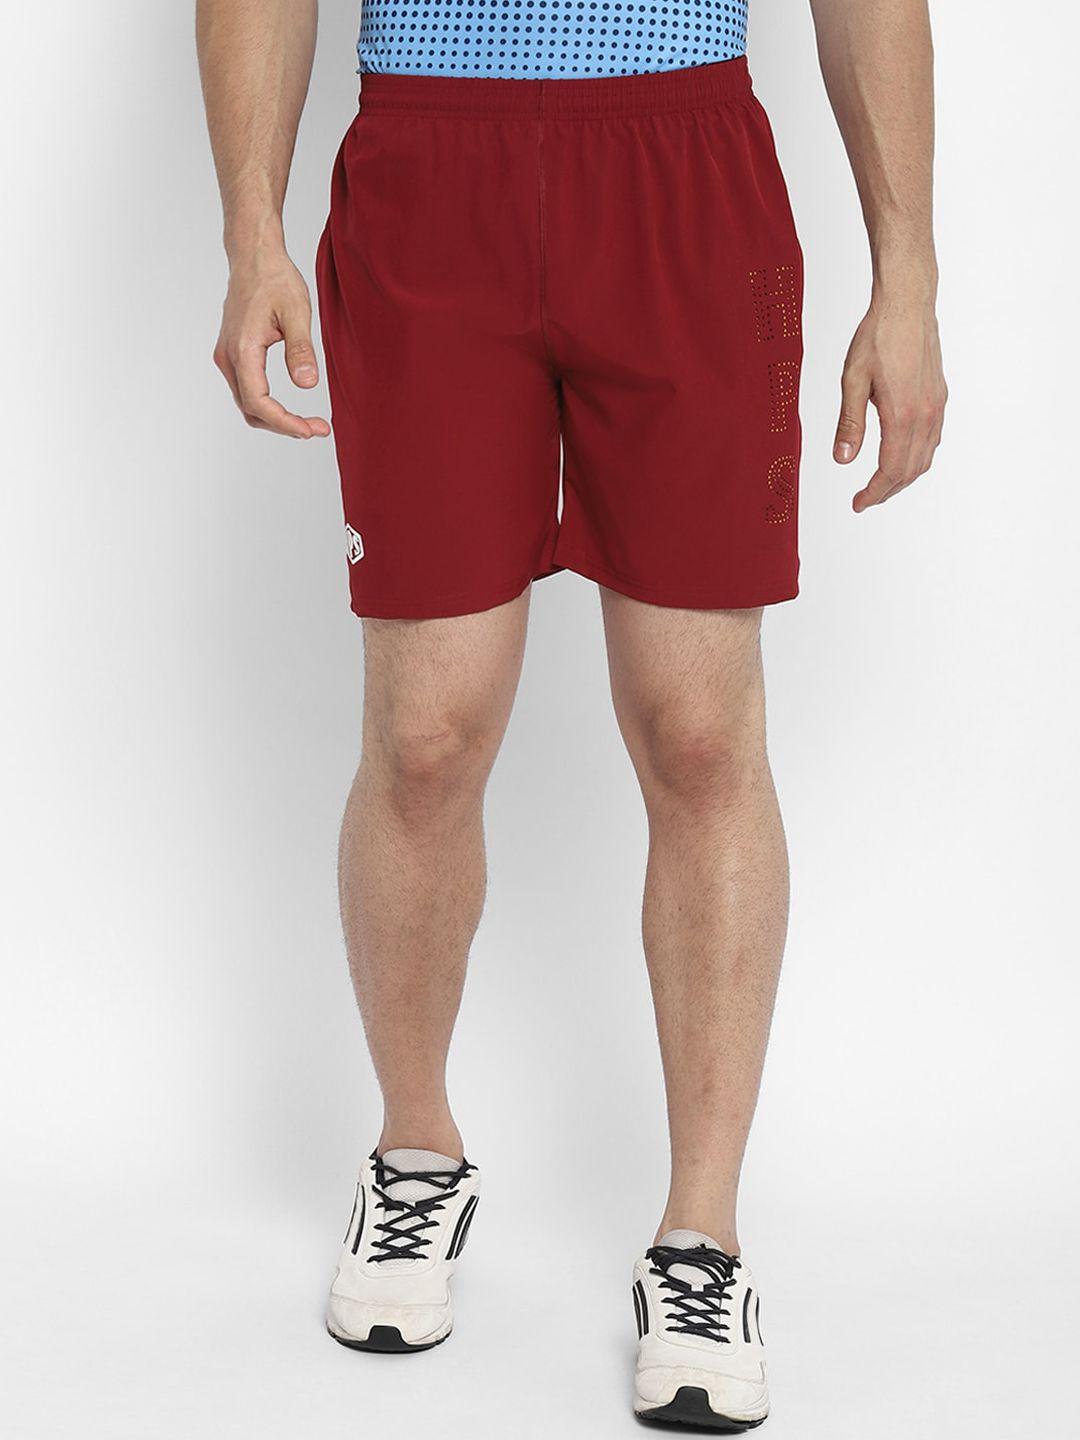 hps-sports-men-red-running-sports-shorts